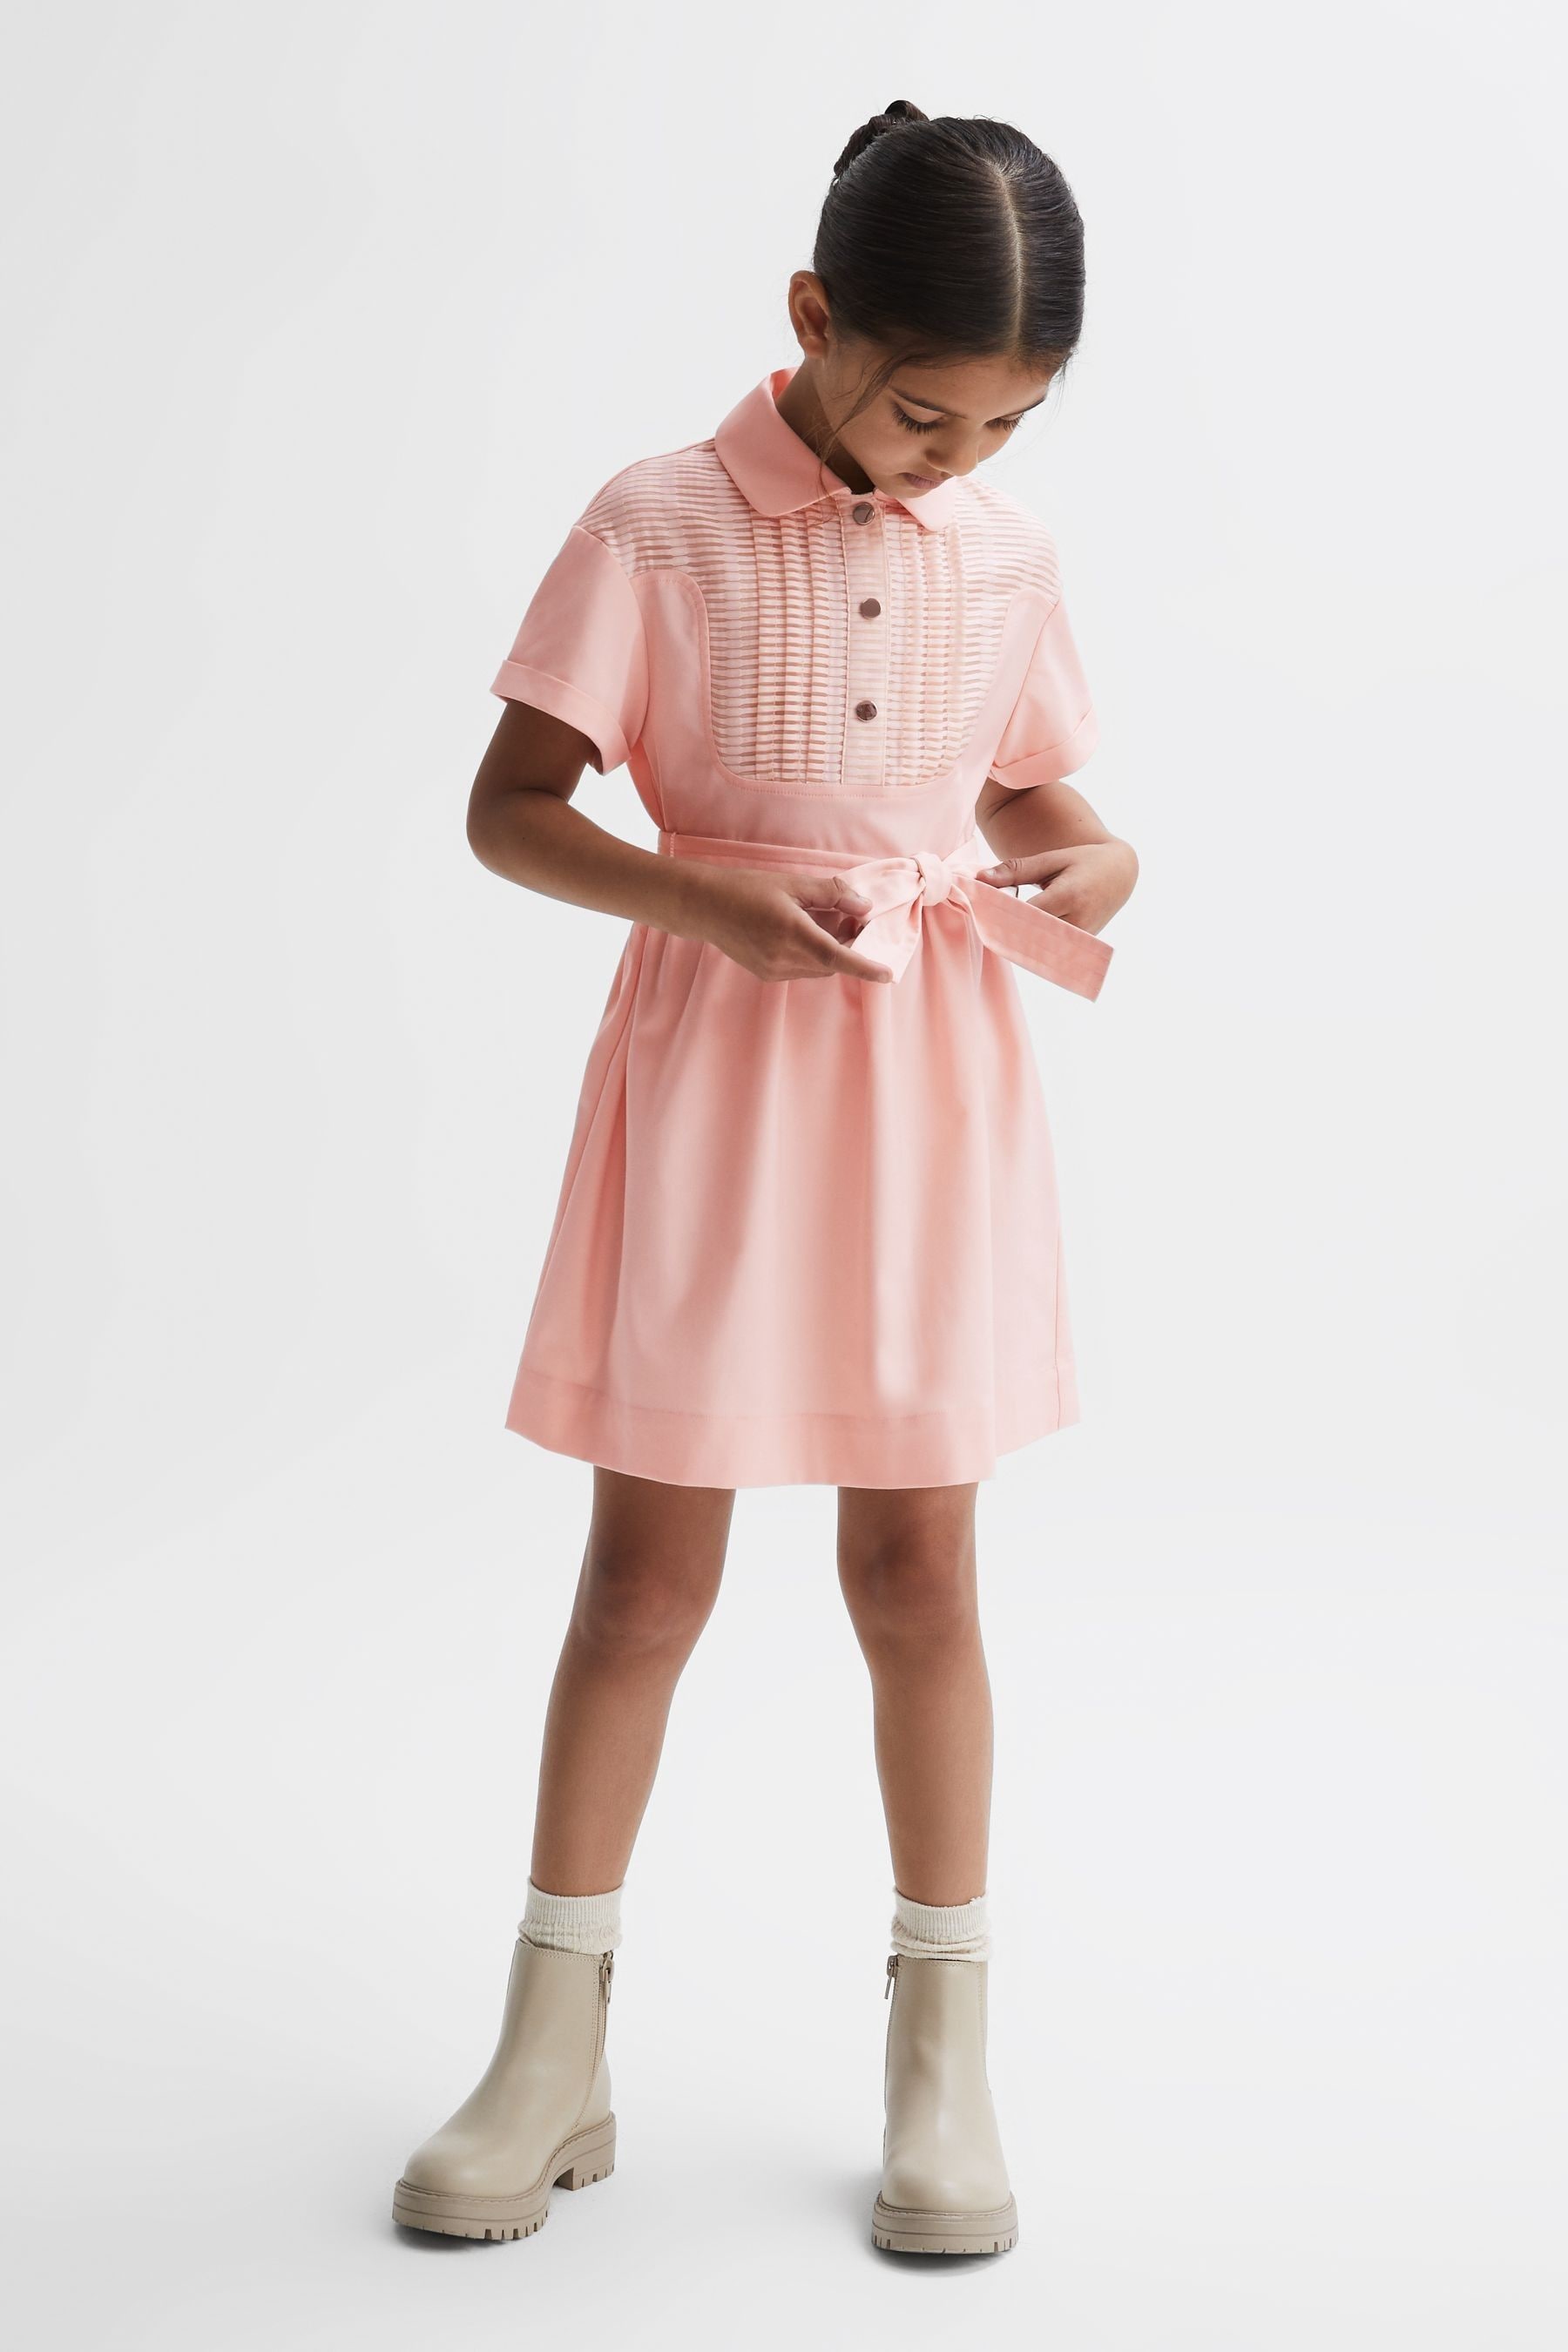 Reiss Wren - Pink Senior Collared Belted Short Sleeve Dress, Uk 12-13 Yrs